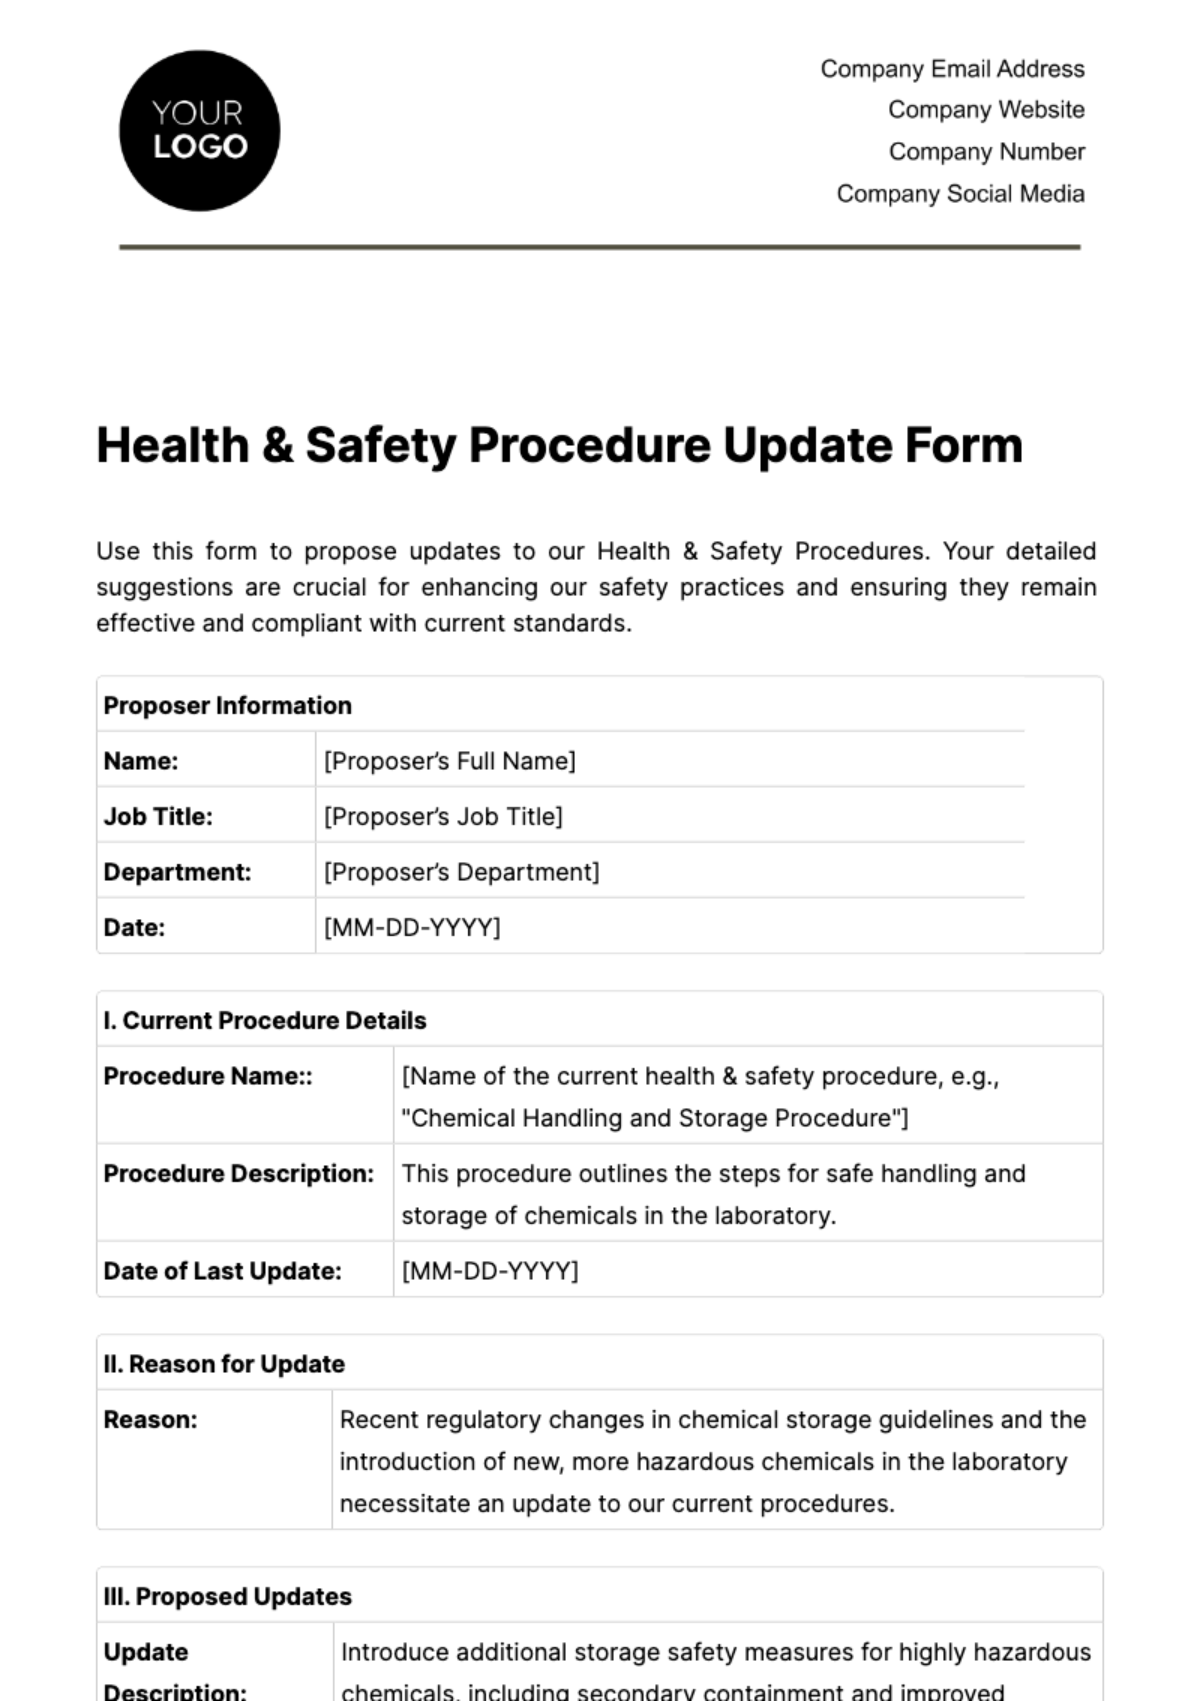 Health & Safety Procedure Update Form Template